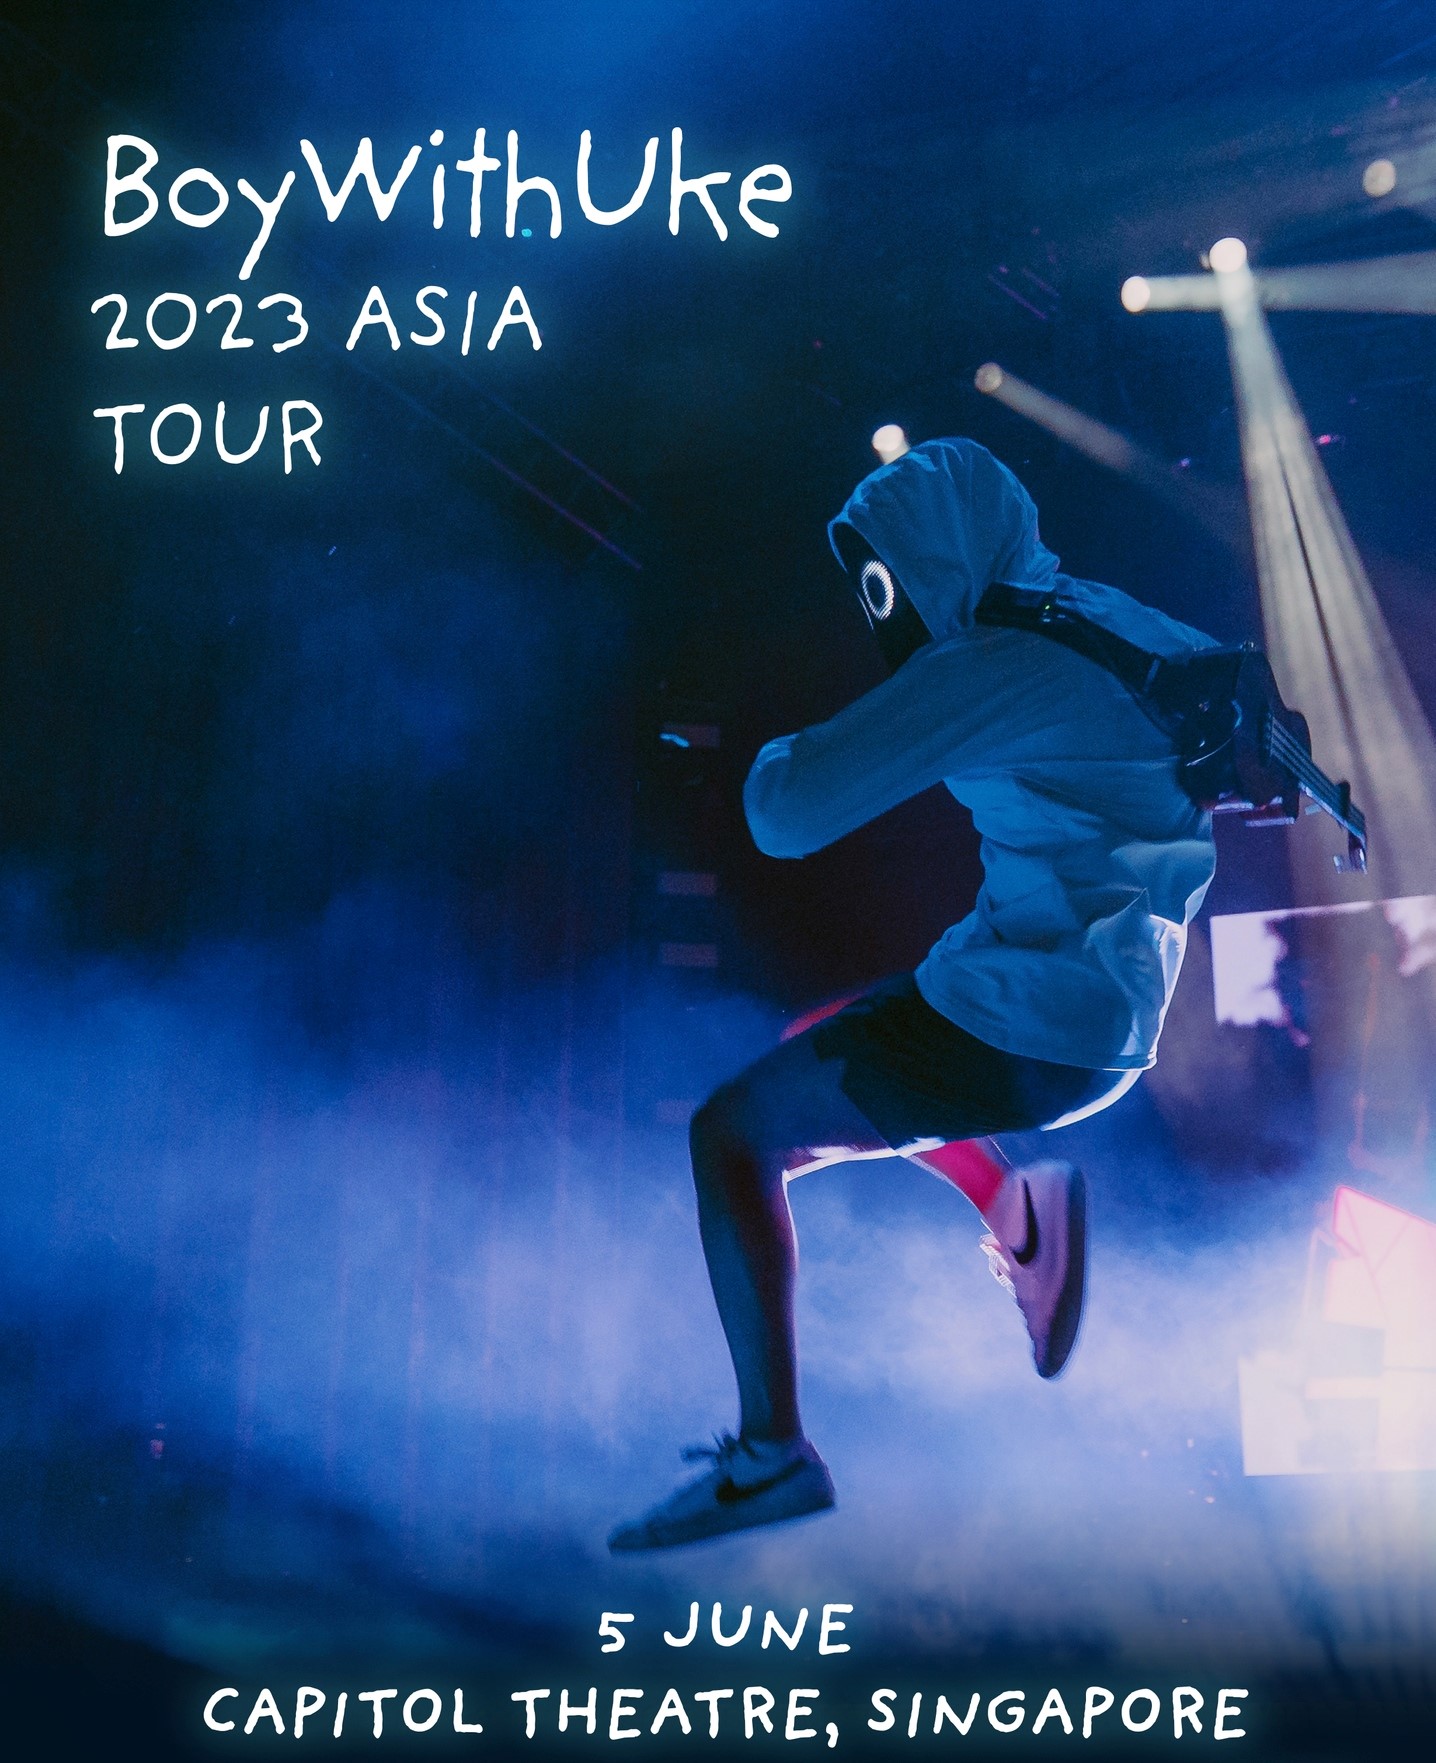 BoyWithUke 2023 Asia Tour in Singapore